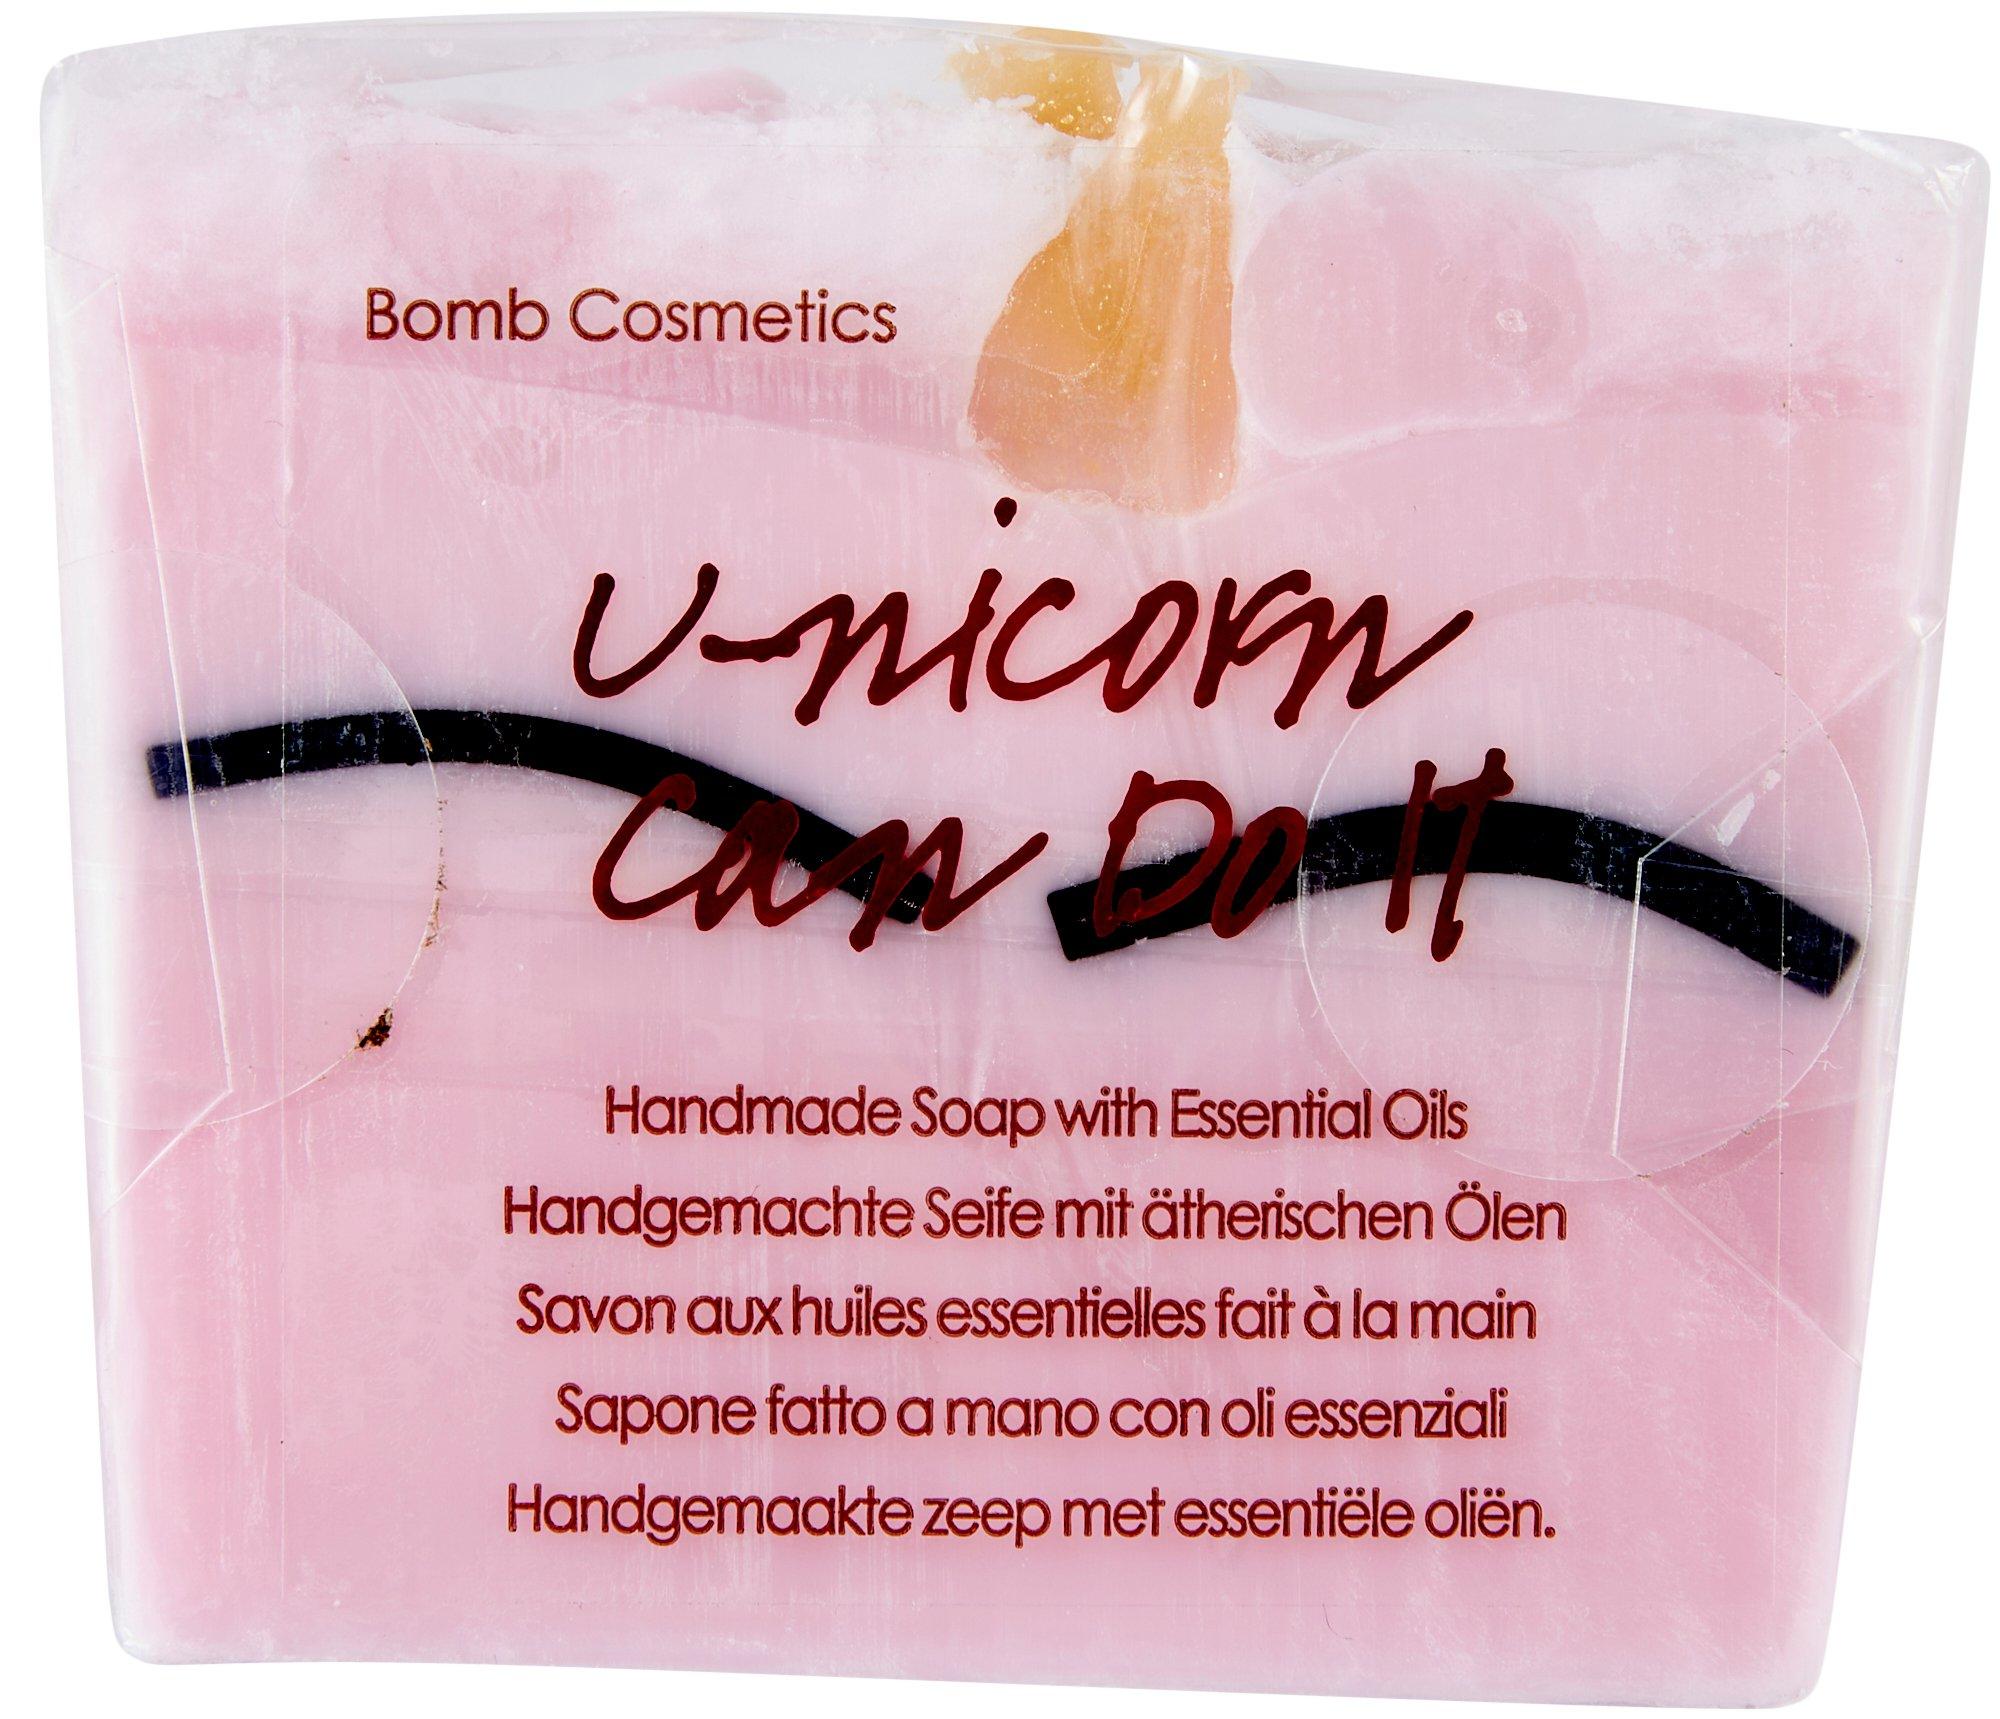 U-nicorn Can Do It Handmade Soap 3.5 oz.